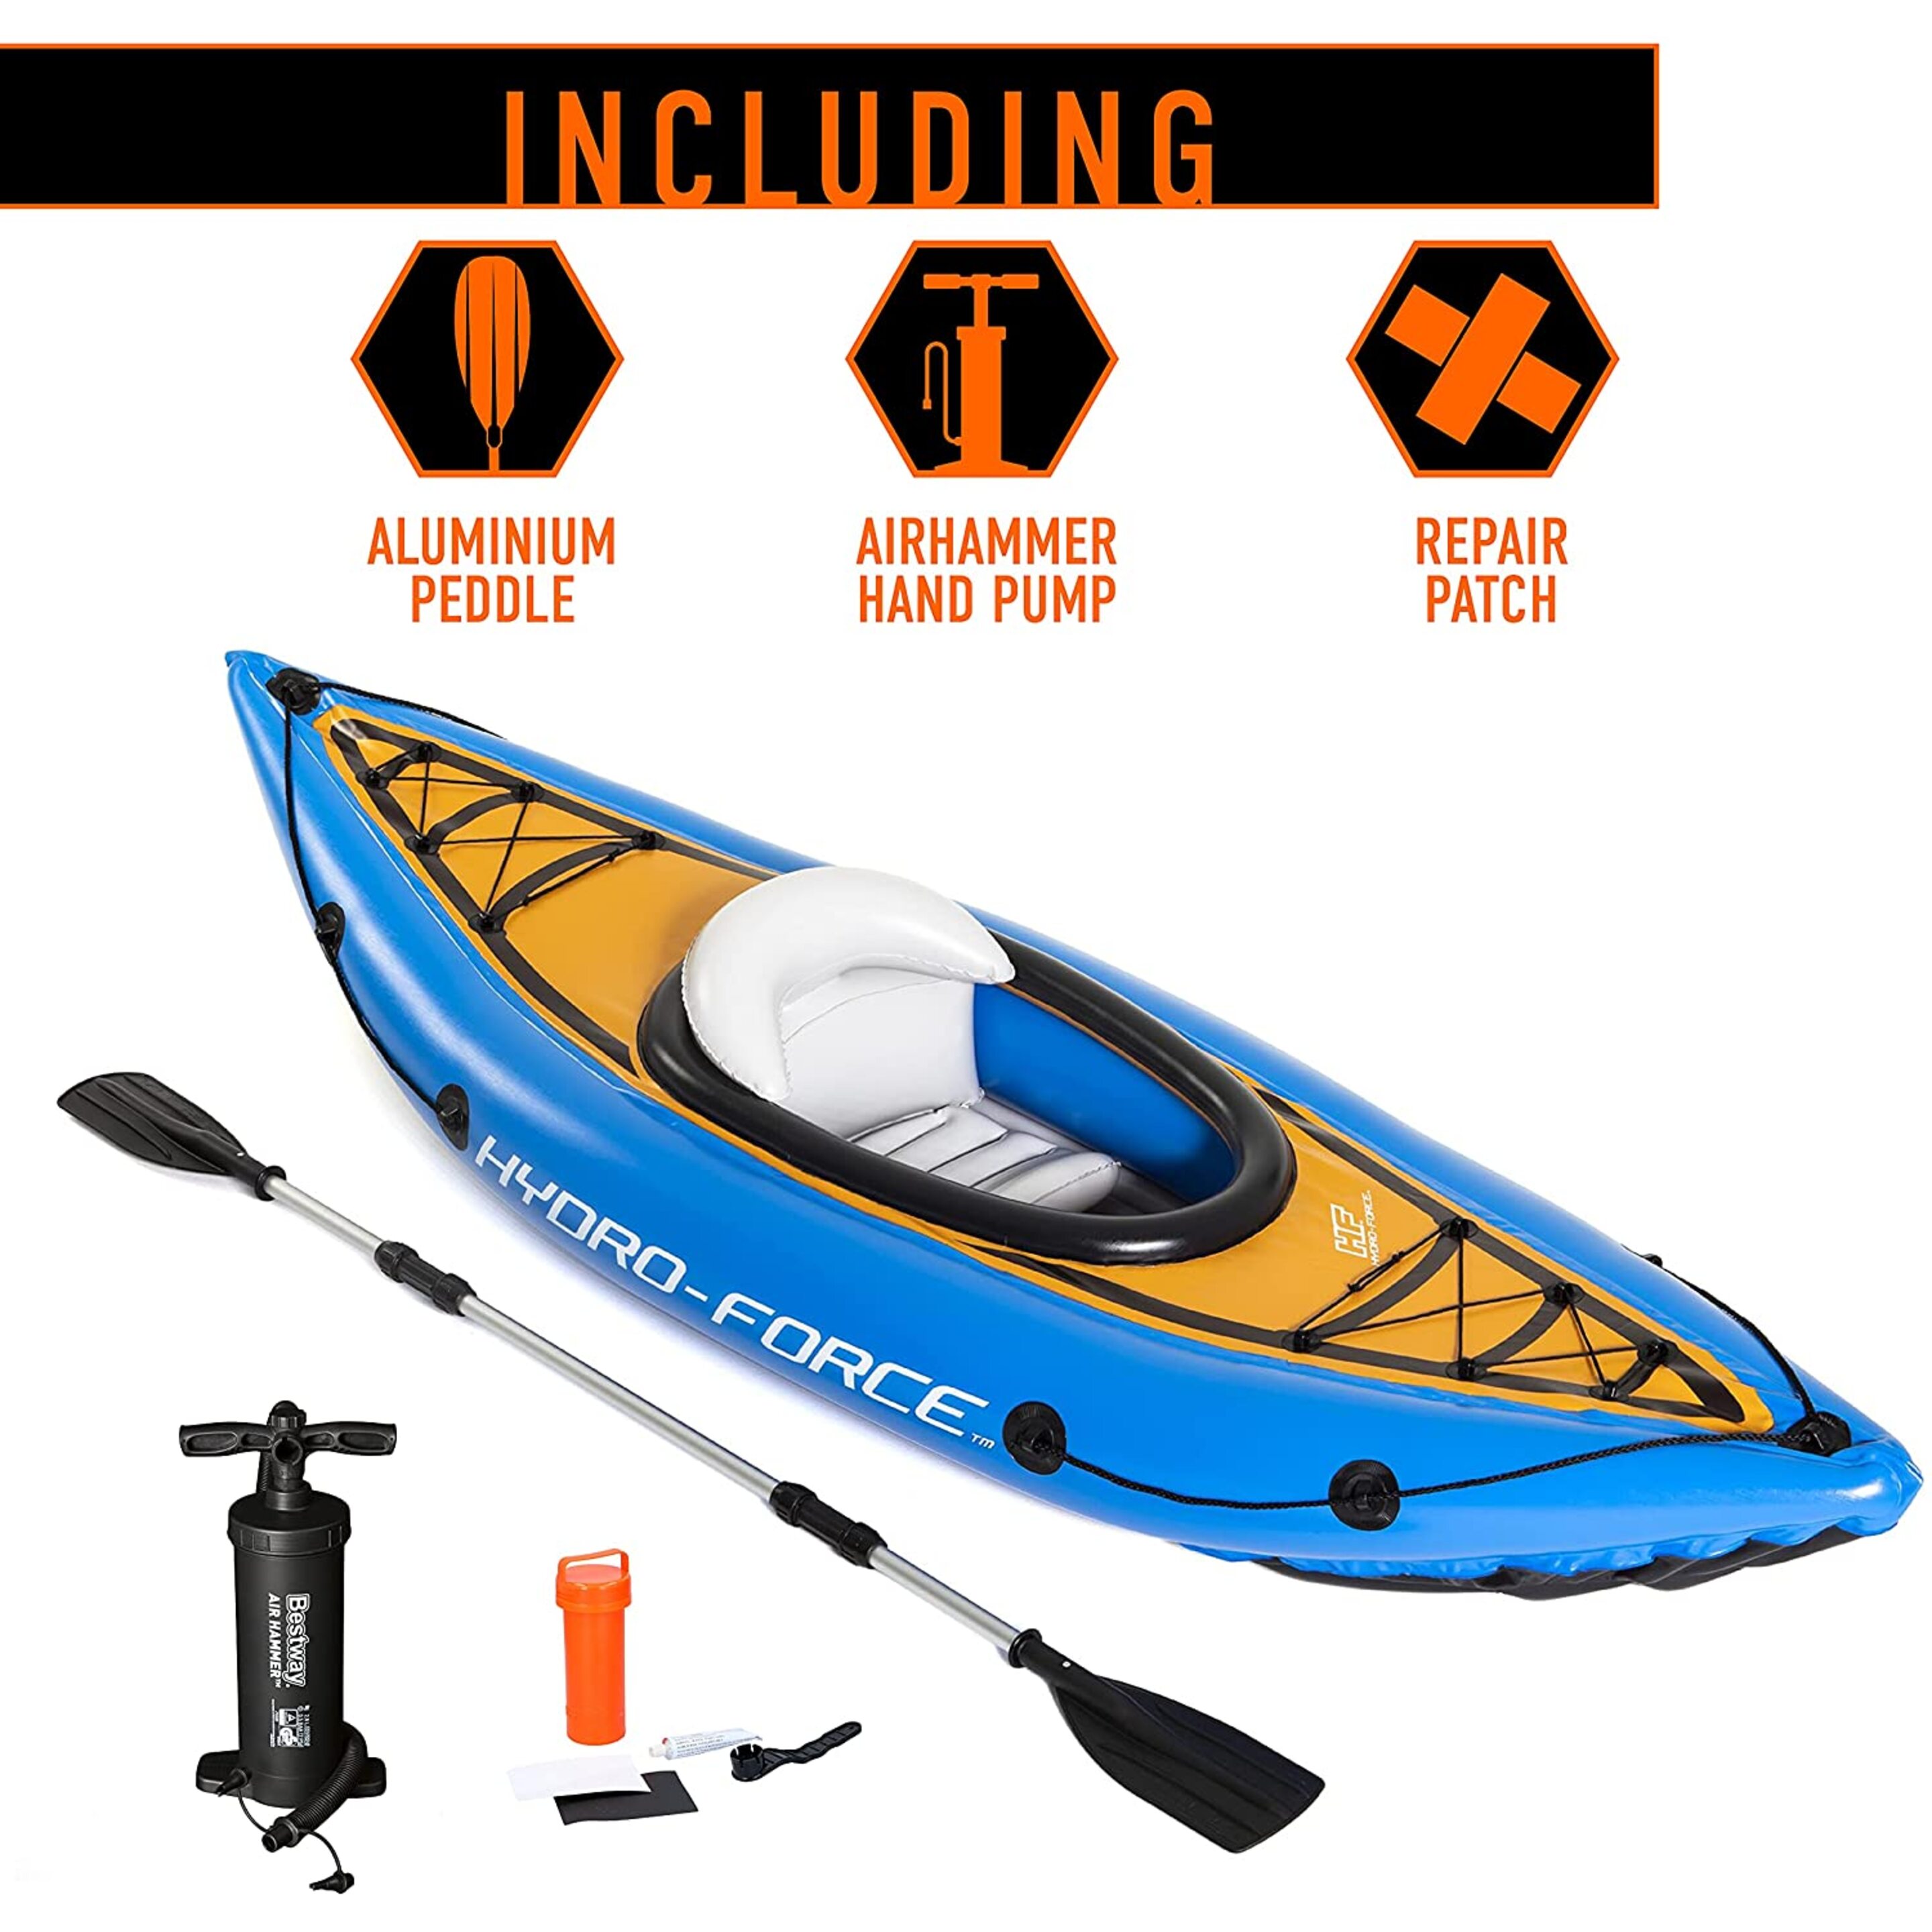 Bestway Kayak Hinchable Hydro Force Cove Champion  - Azul - Kayak individual  MKP